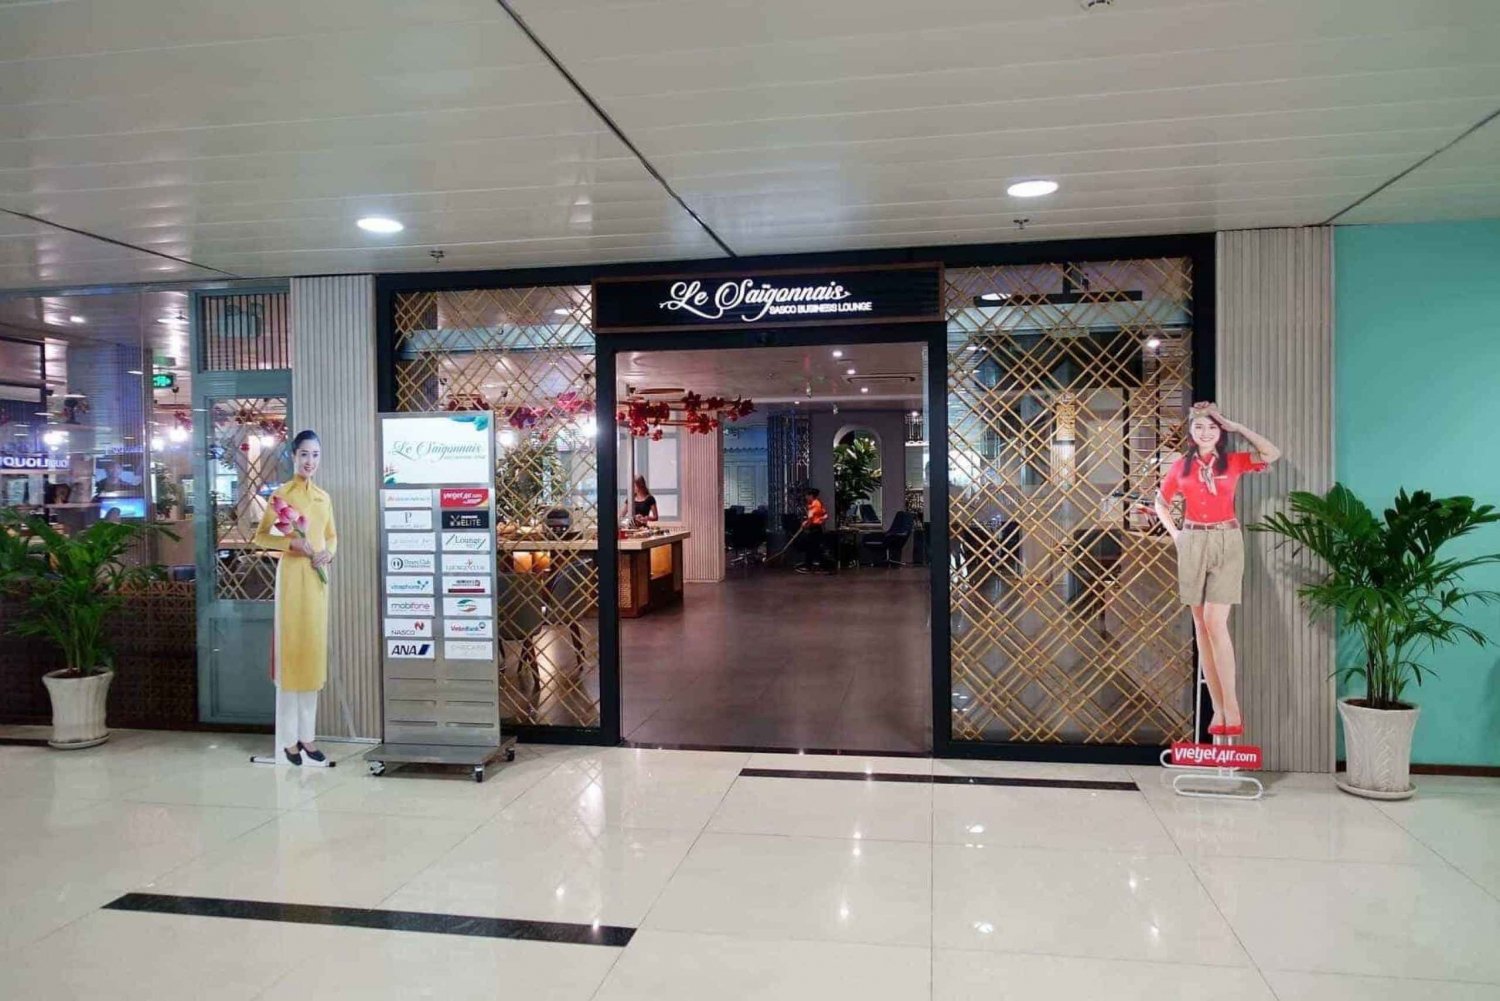 Hochimin: Tan Son Nhat International Airport Business Lounge